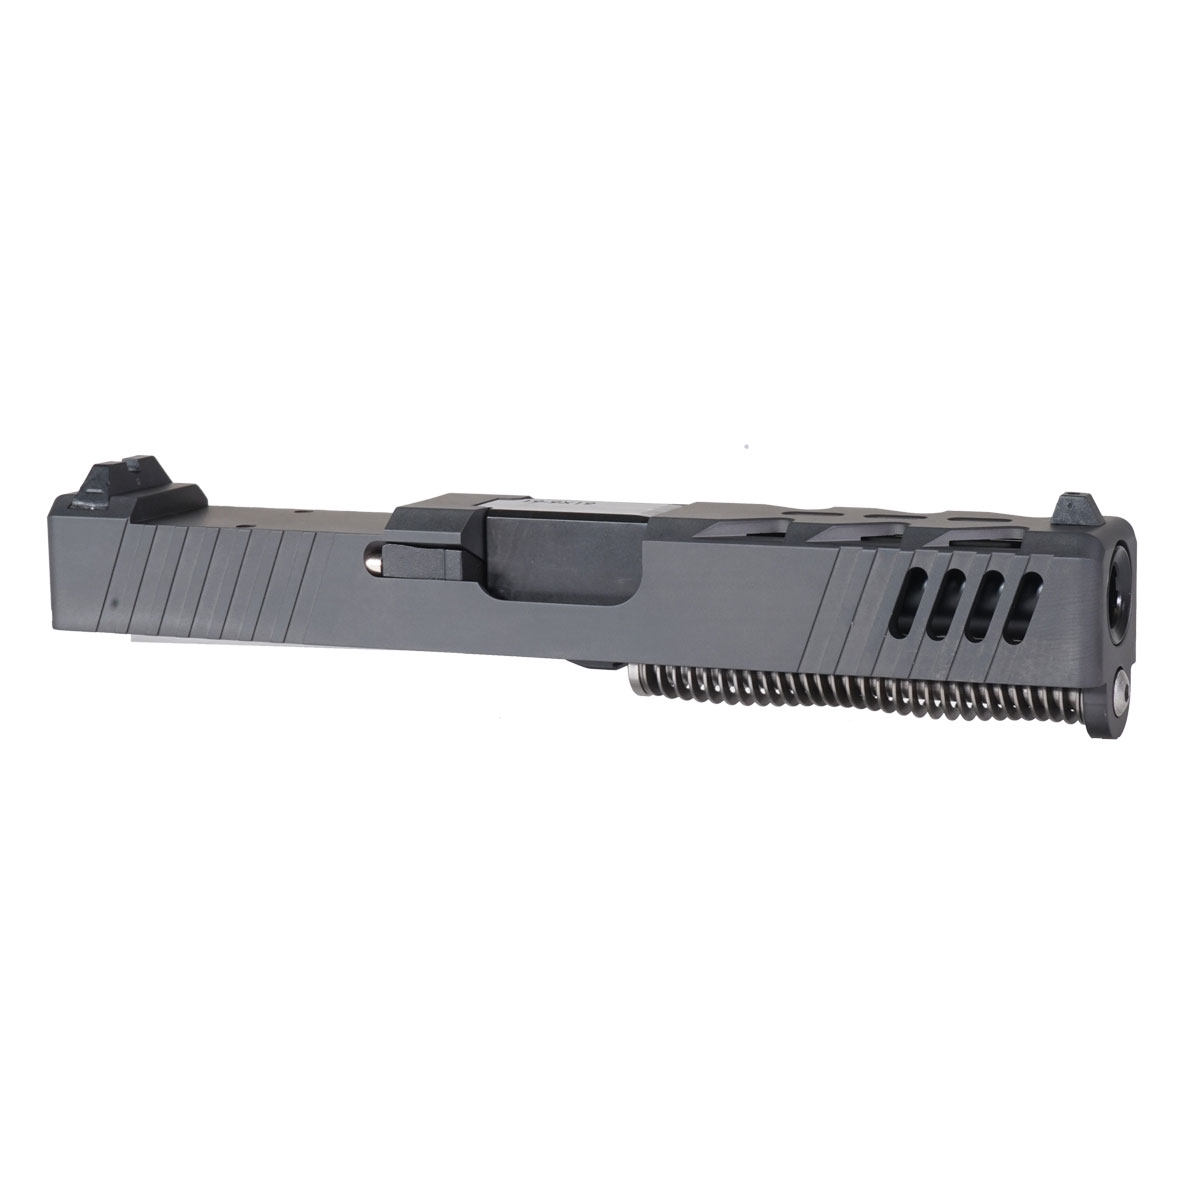 DDS 'The Yiker' 9mm Complete Slide Kit - Glock 19 Gen 1-3 Compatible